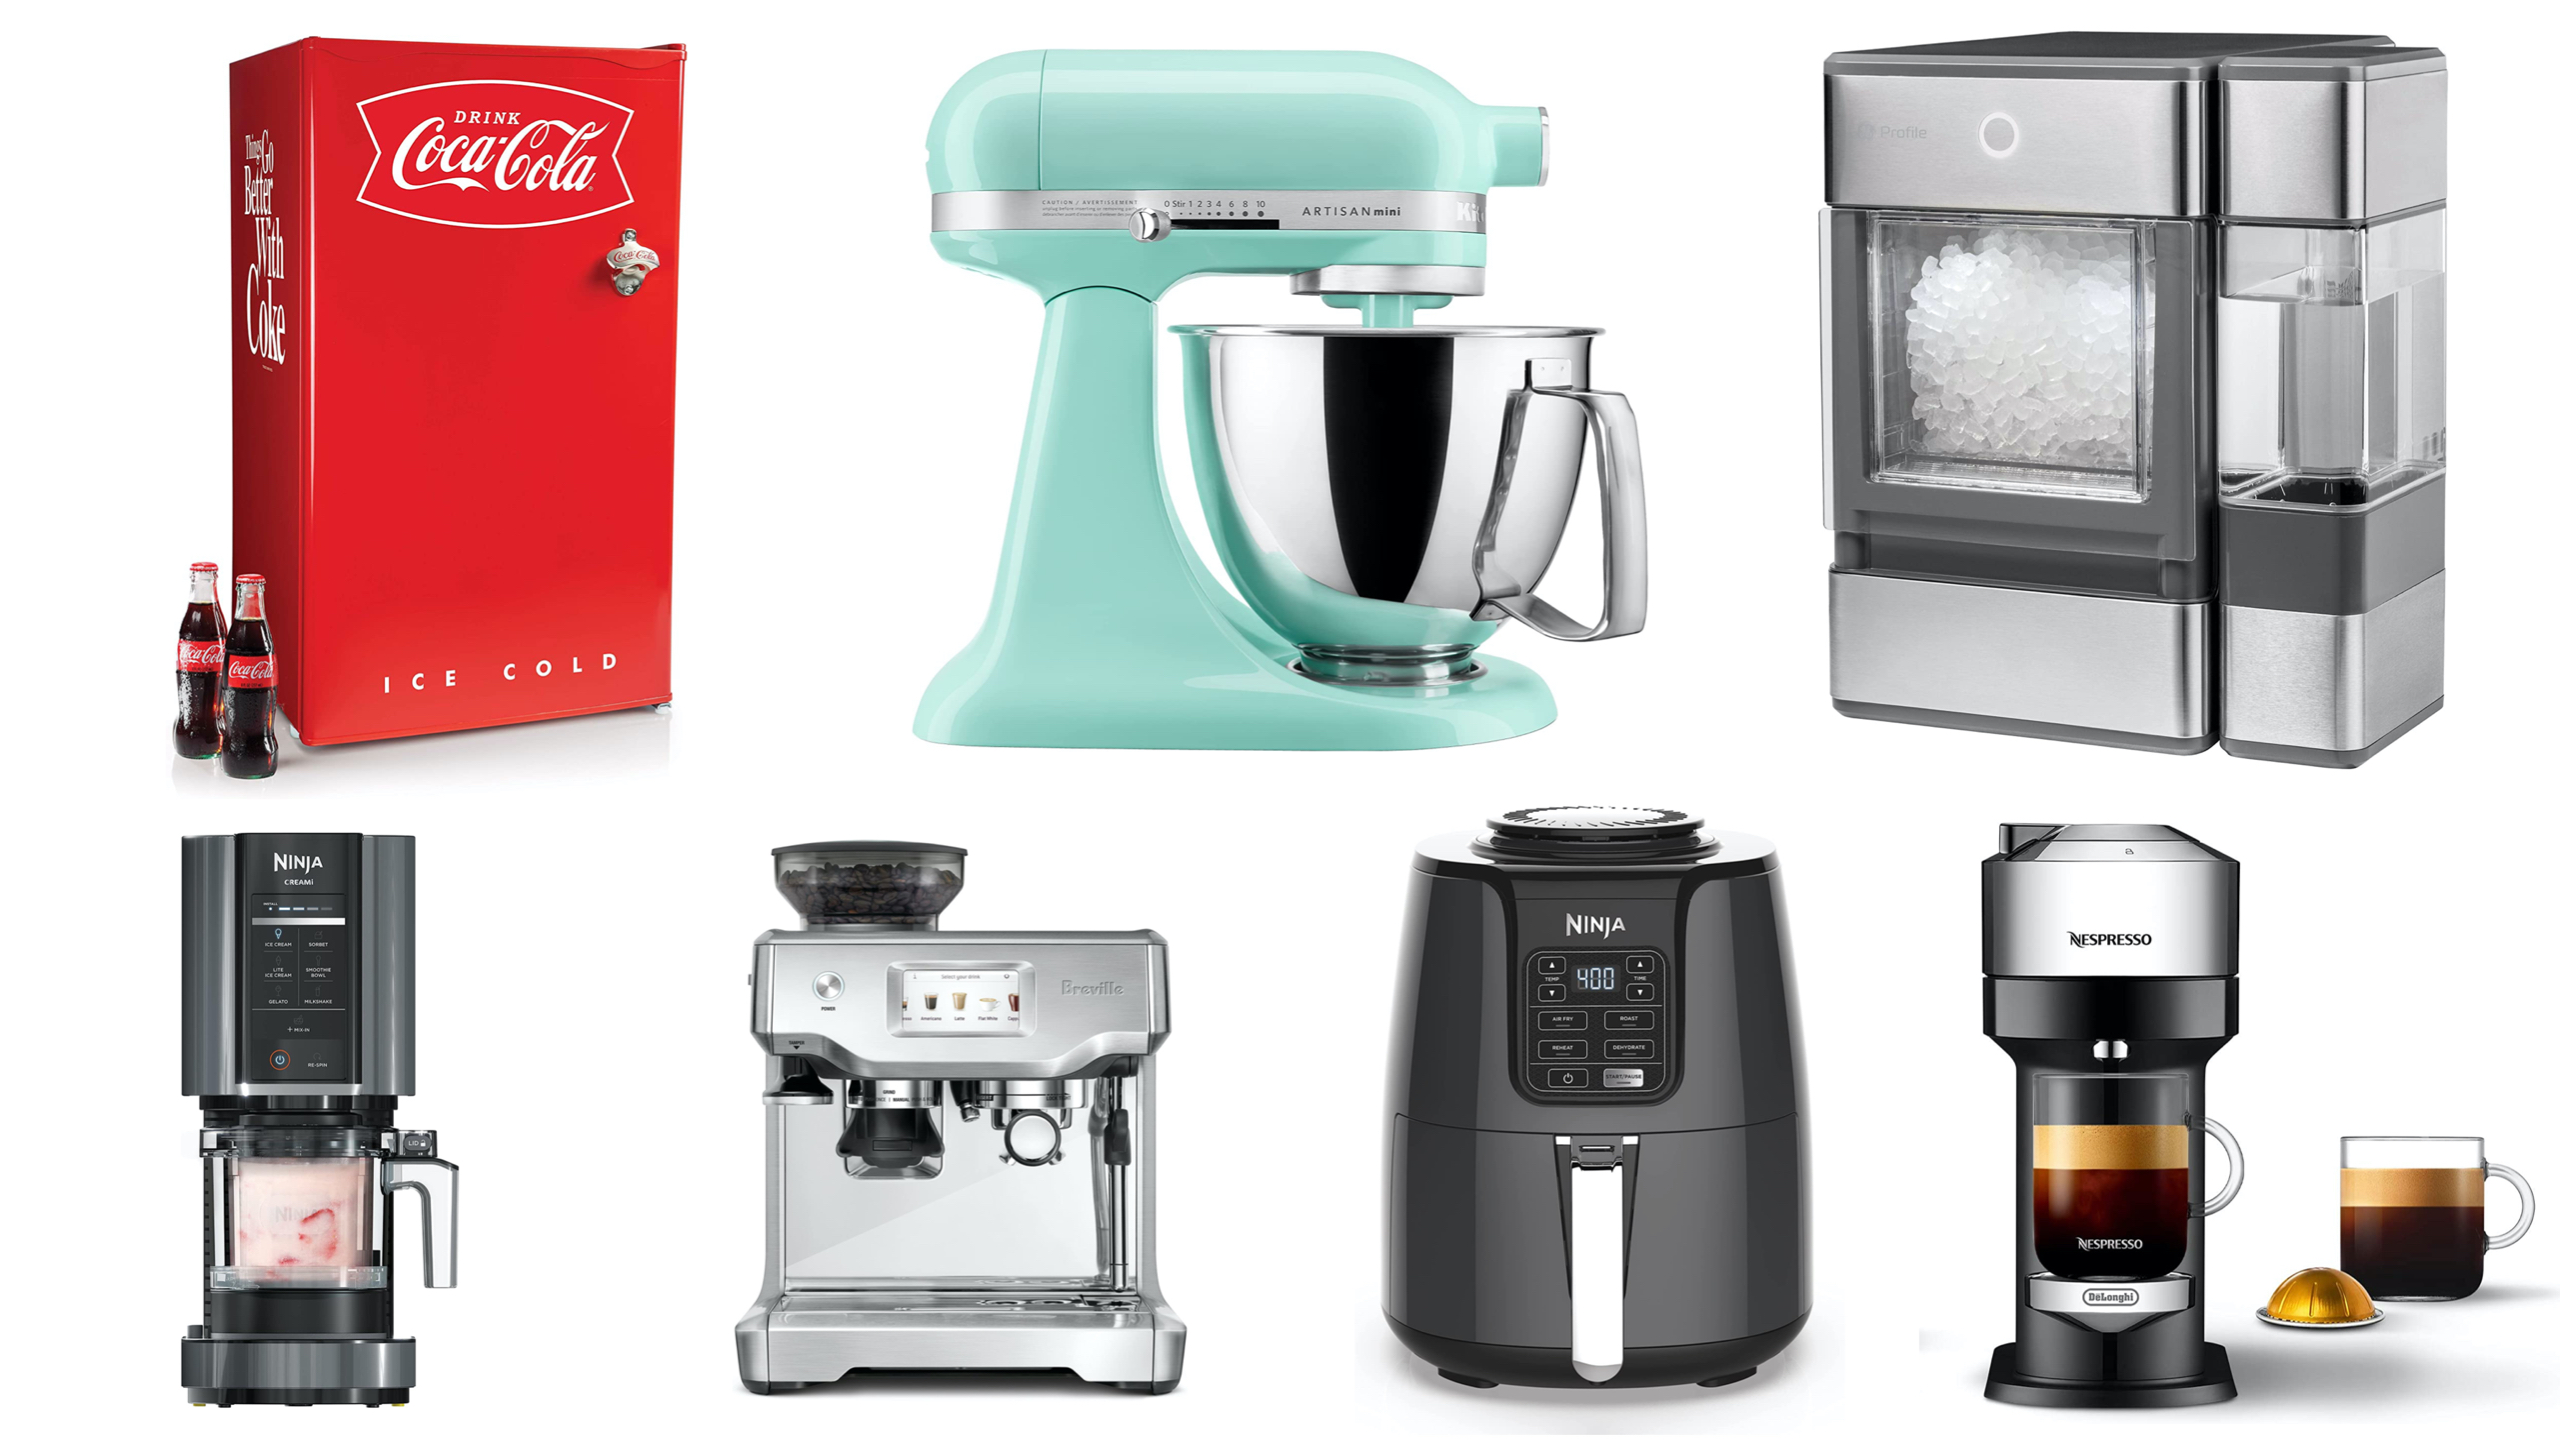 Best Ninja deals: Get Ninja kitchen appliances up to 32% off at